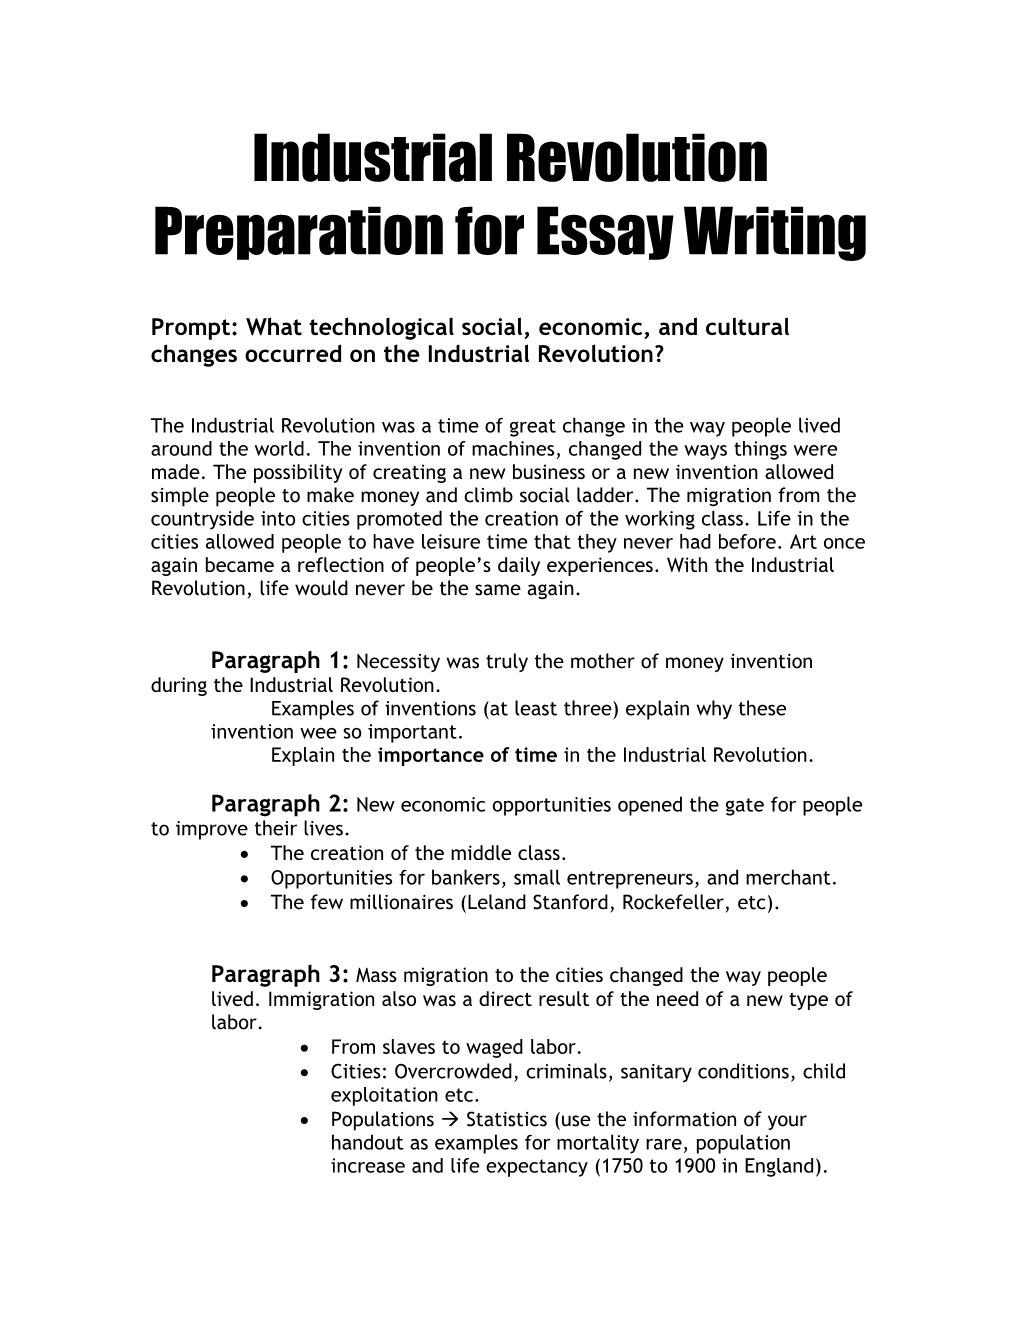 Preparation for Essay Writing